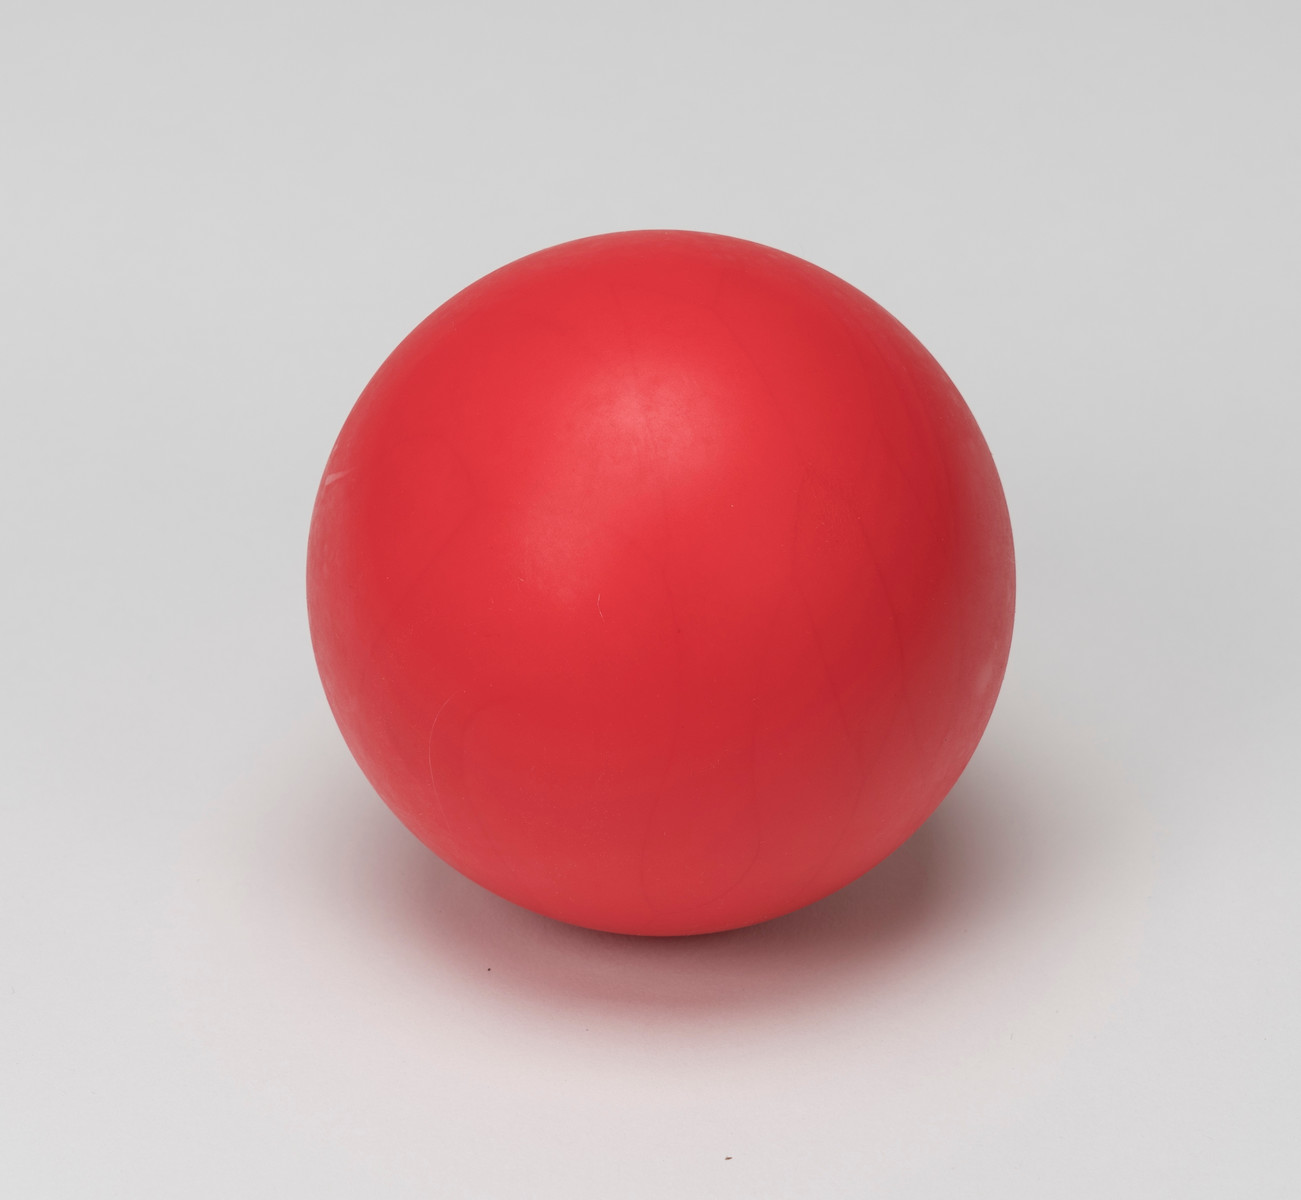 CRQ 711 Croquet Balls CRQ PRO-BALZ, USA, Classic, High Action, 10.8 oz, Red